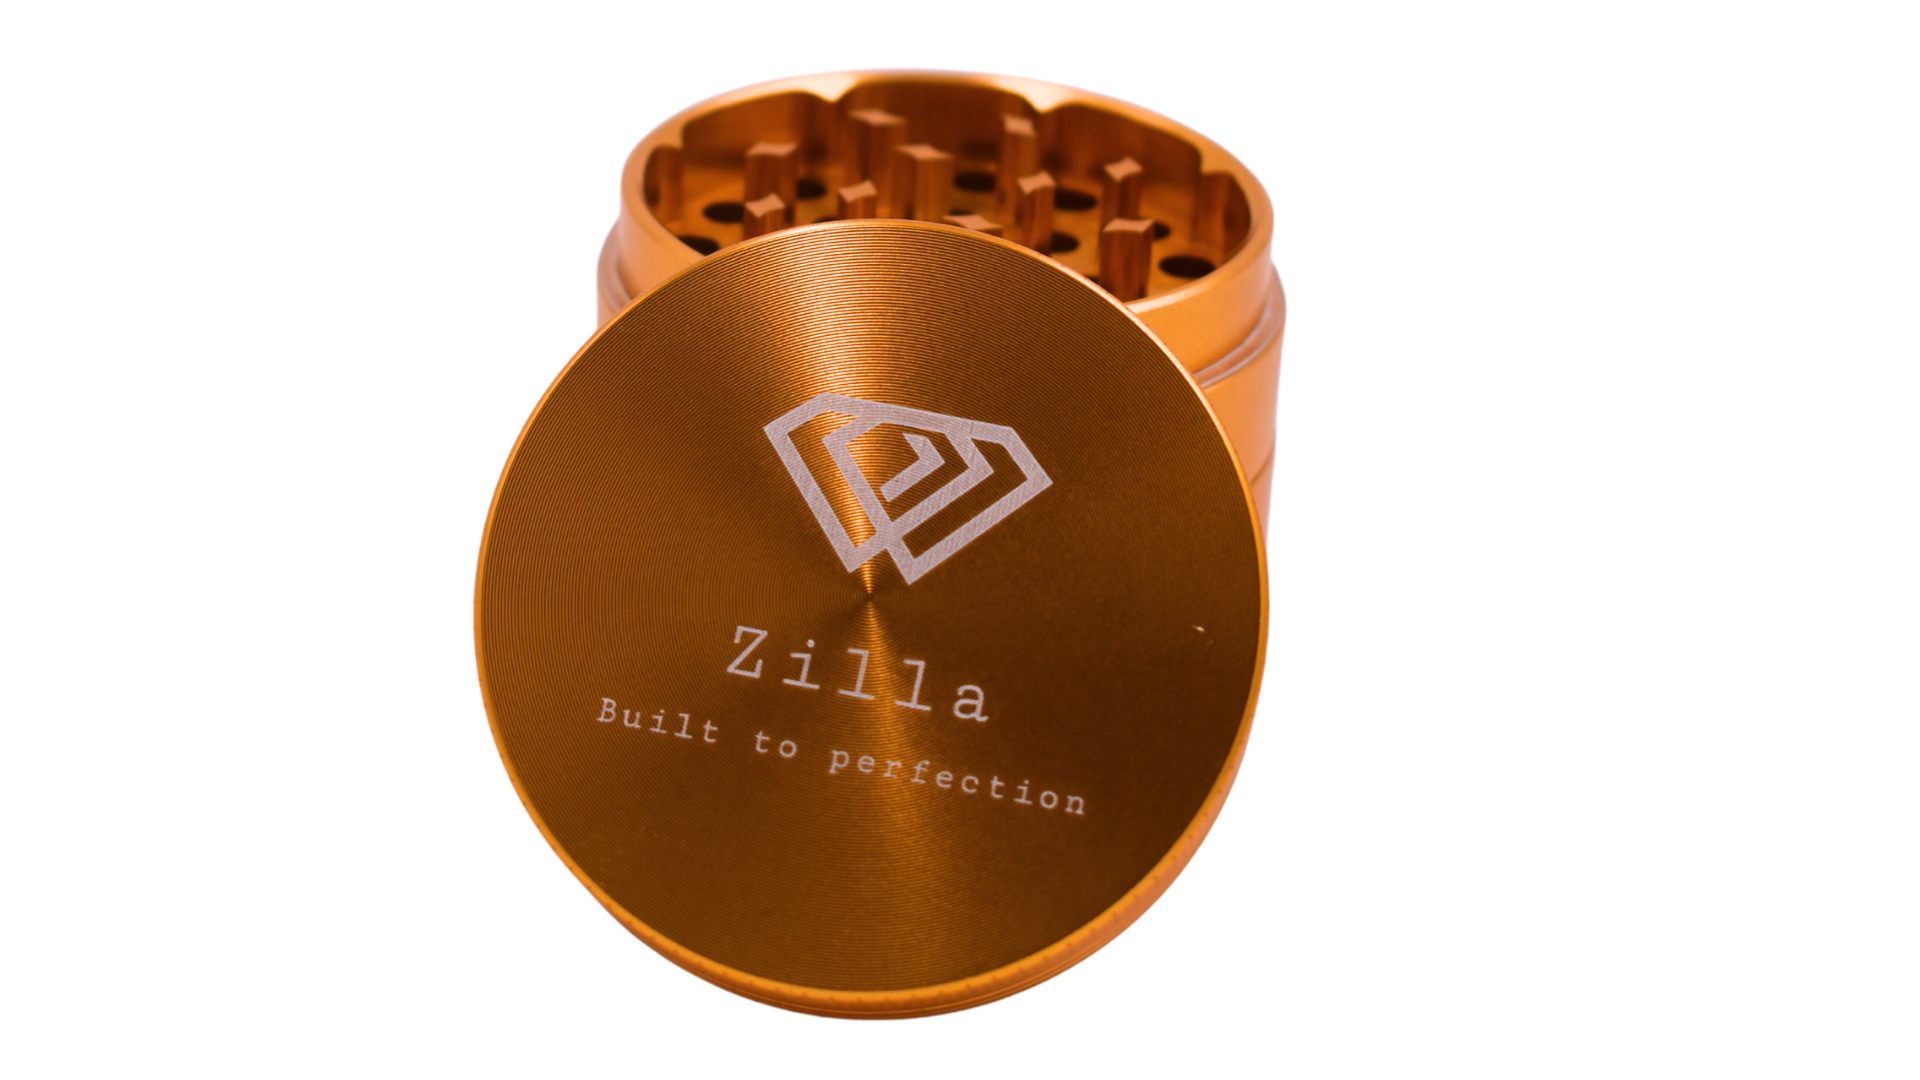 Zilla Aluminium 50mm (Medium Size) Grinder - Gold - Bittchaser Smoke Shop